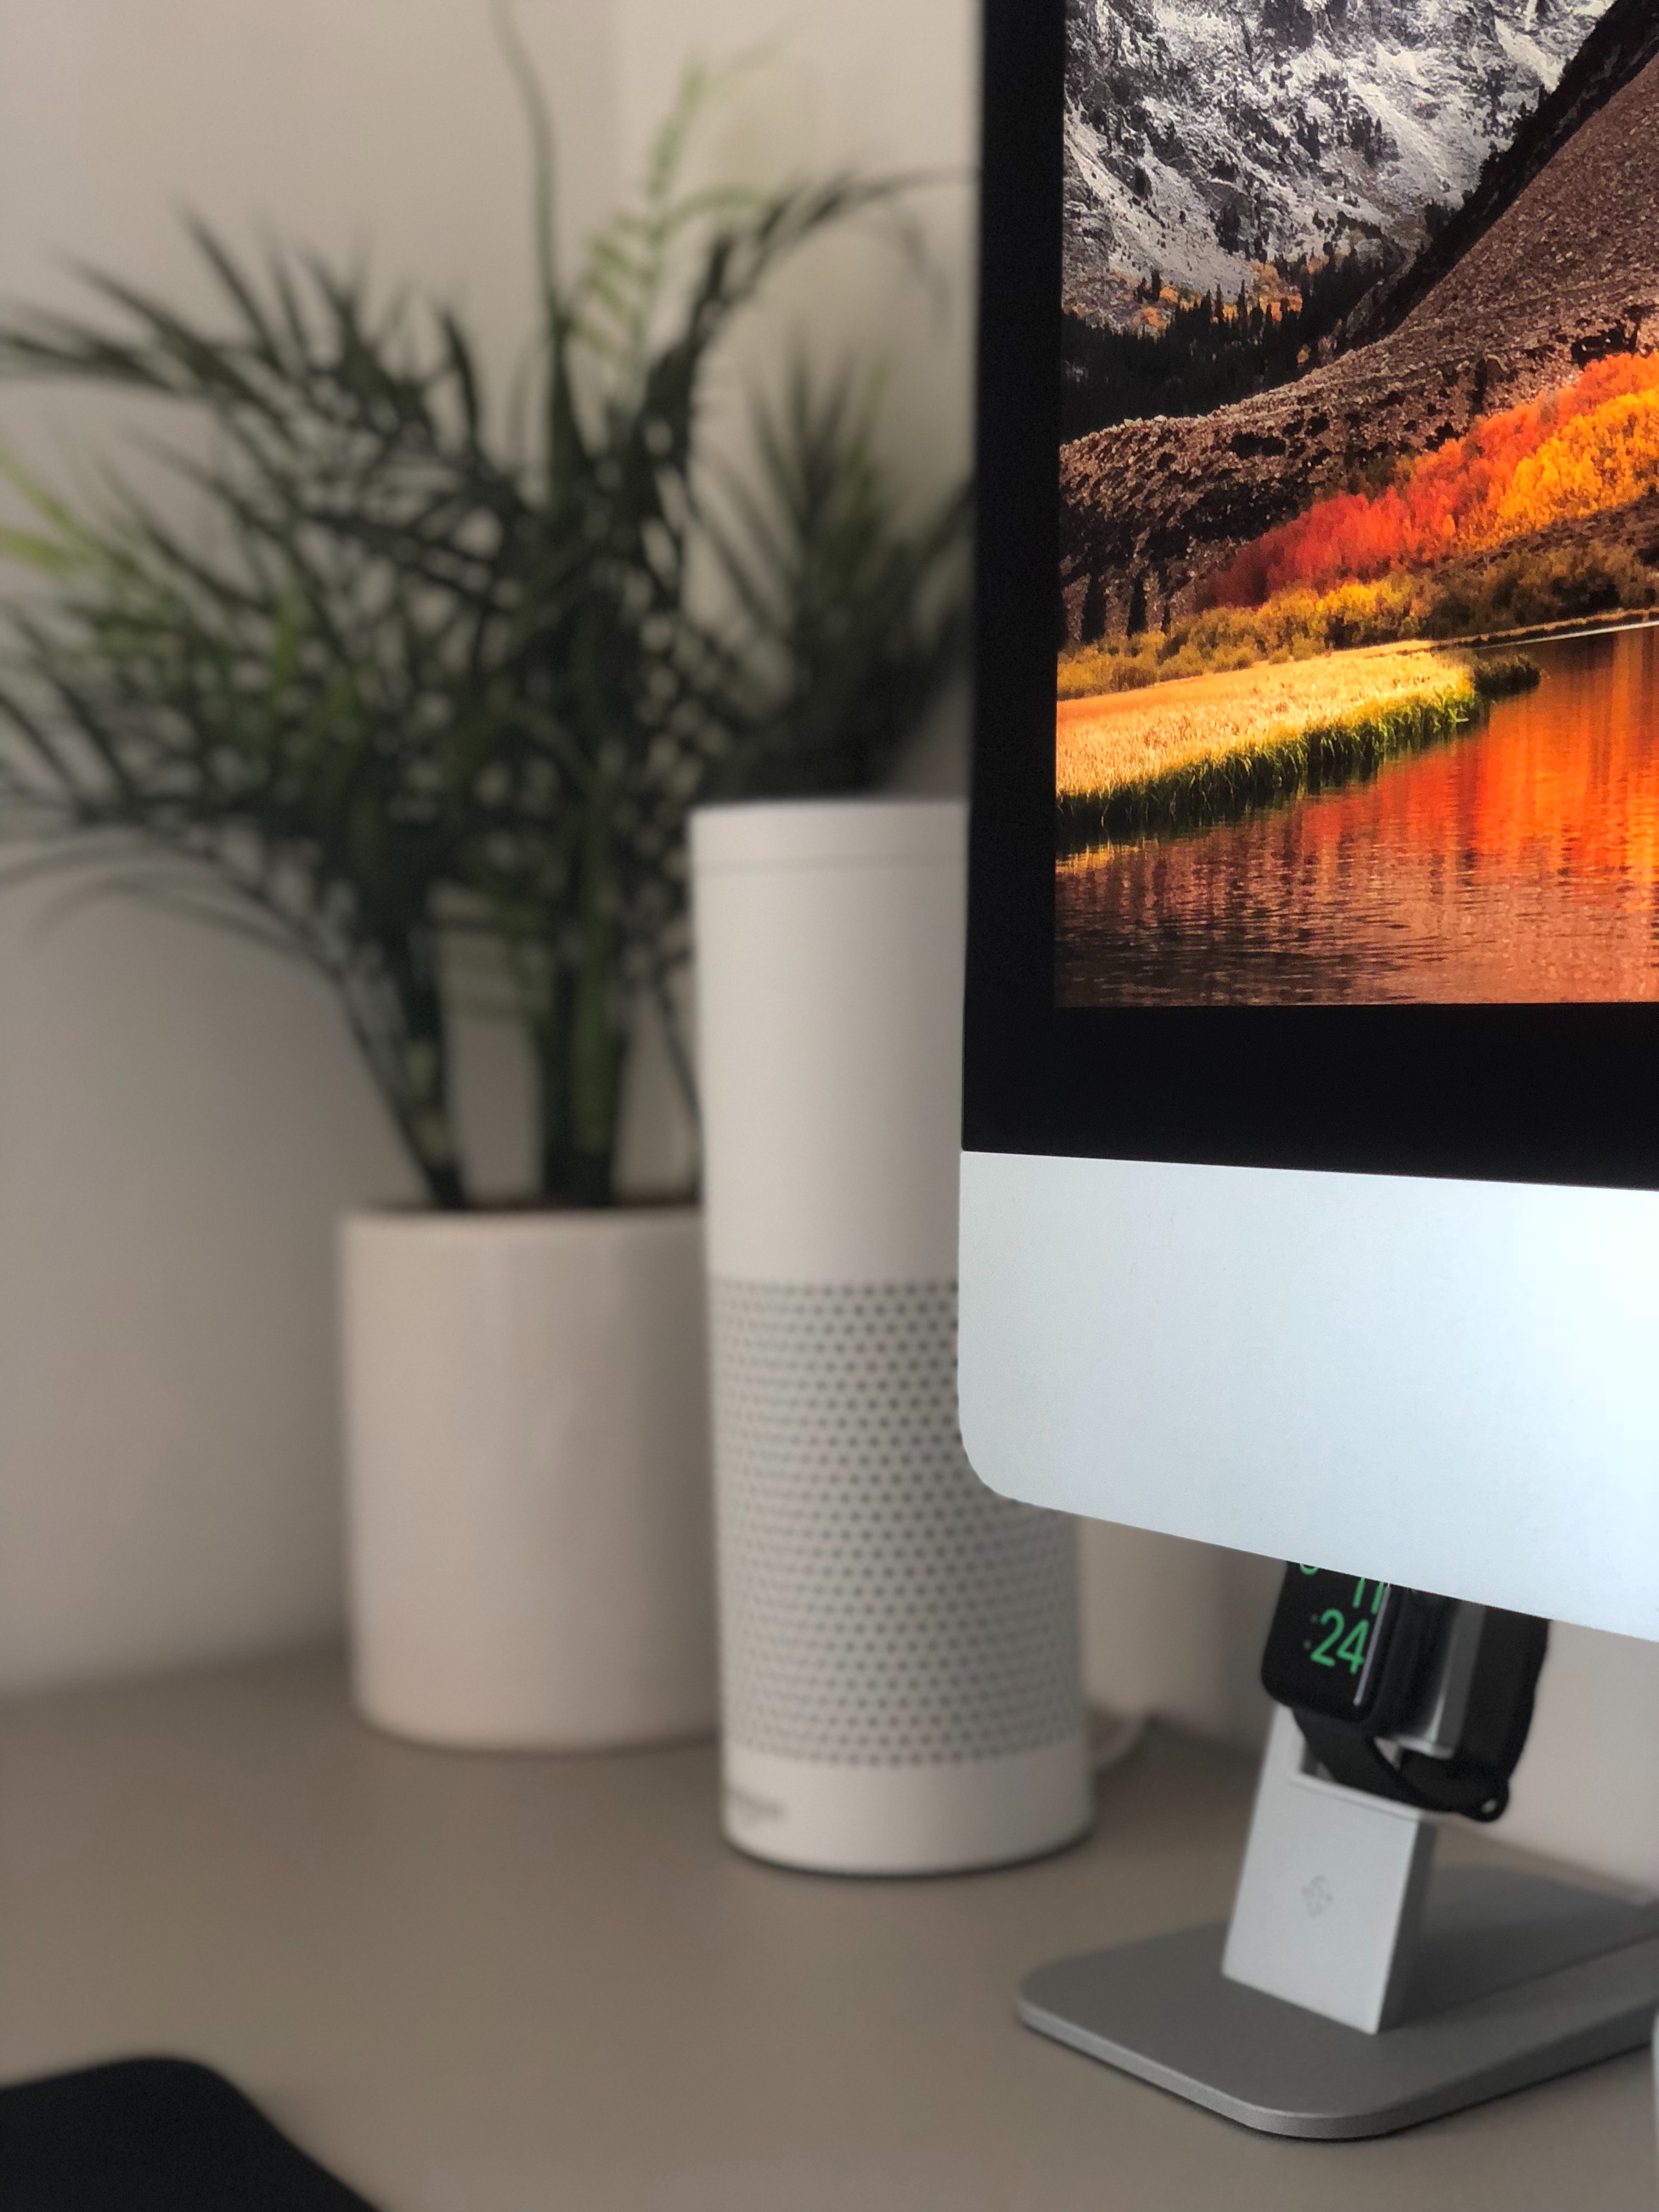 Desk with Amazon Echo